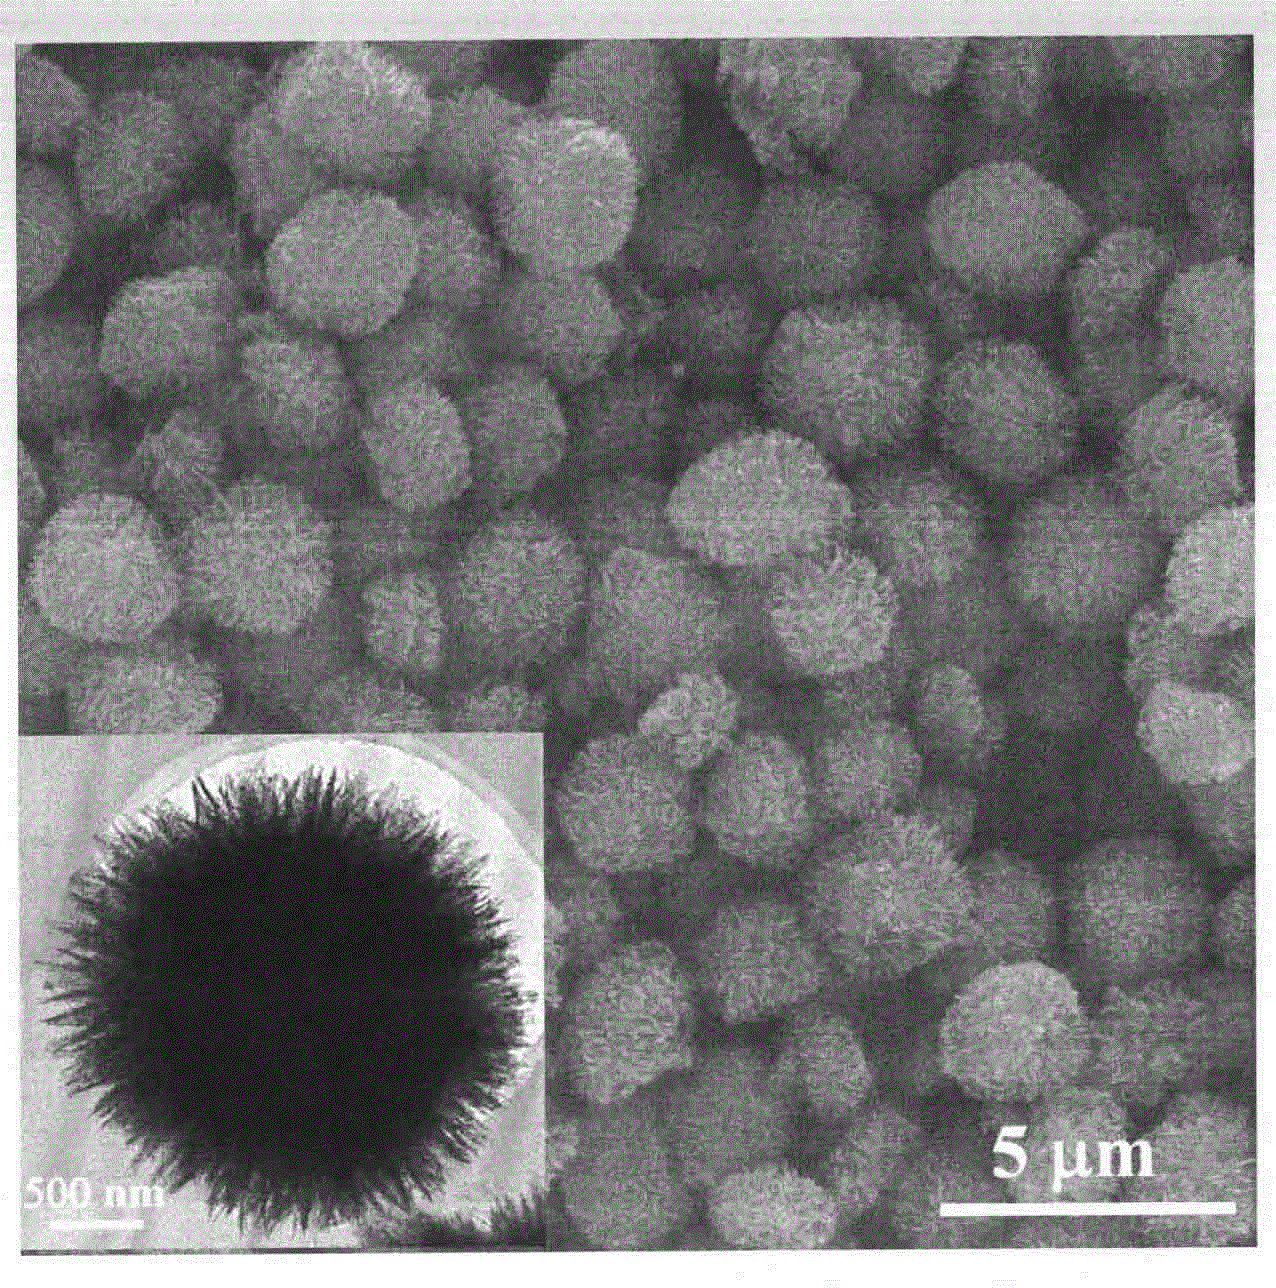 cn102153138a_一种基于纳米棒和纳米颗粒组成的分等级二氧化钛微米球